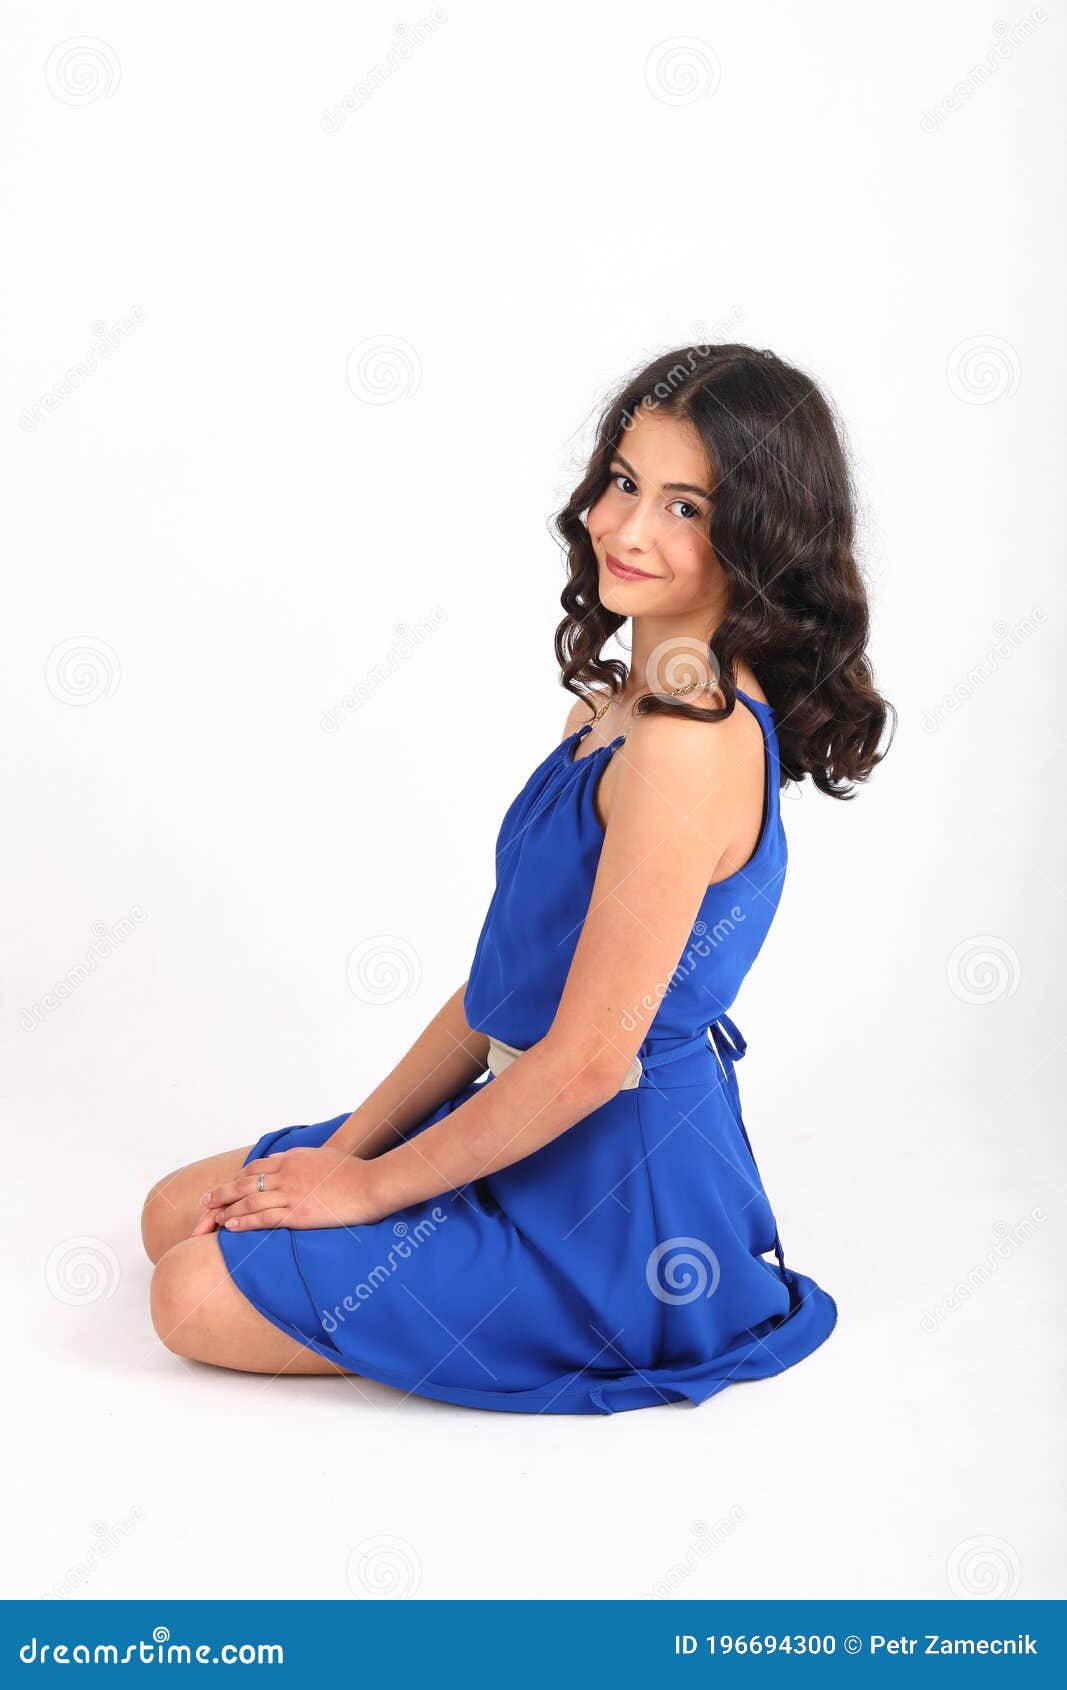 Smiling Teenage Girl Posing in Blue Dress Stock Photo - Image of ...